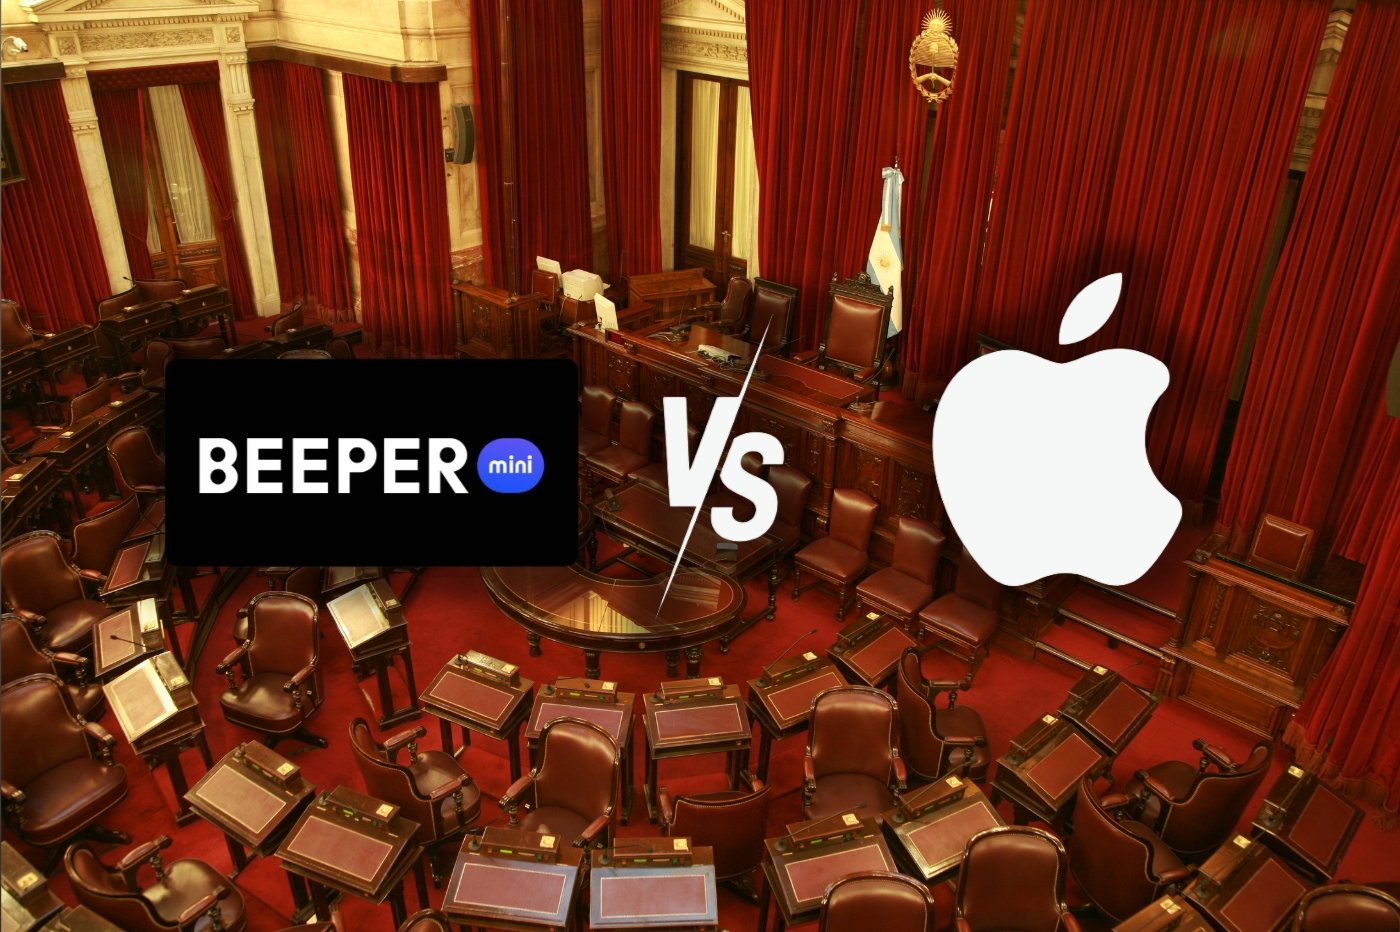 Beeper vs apple